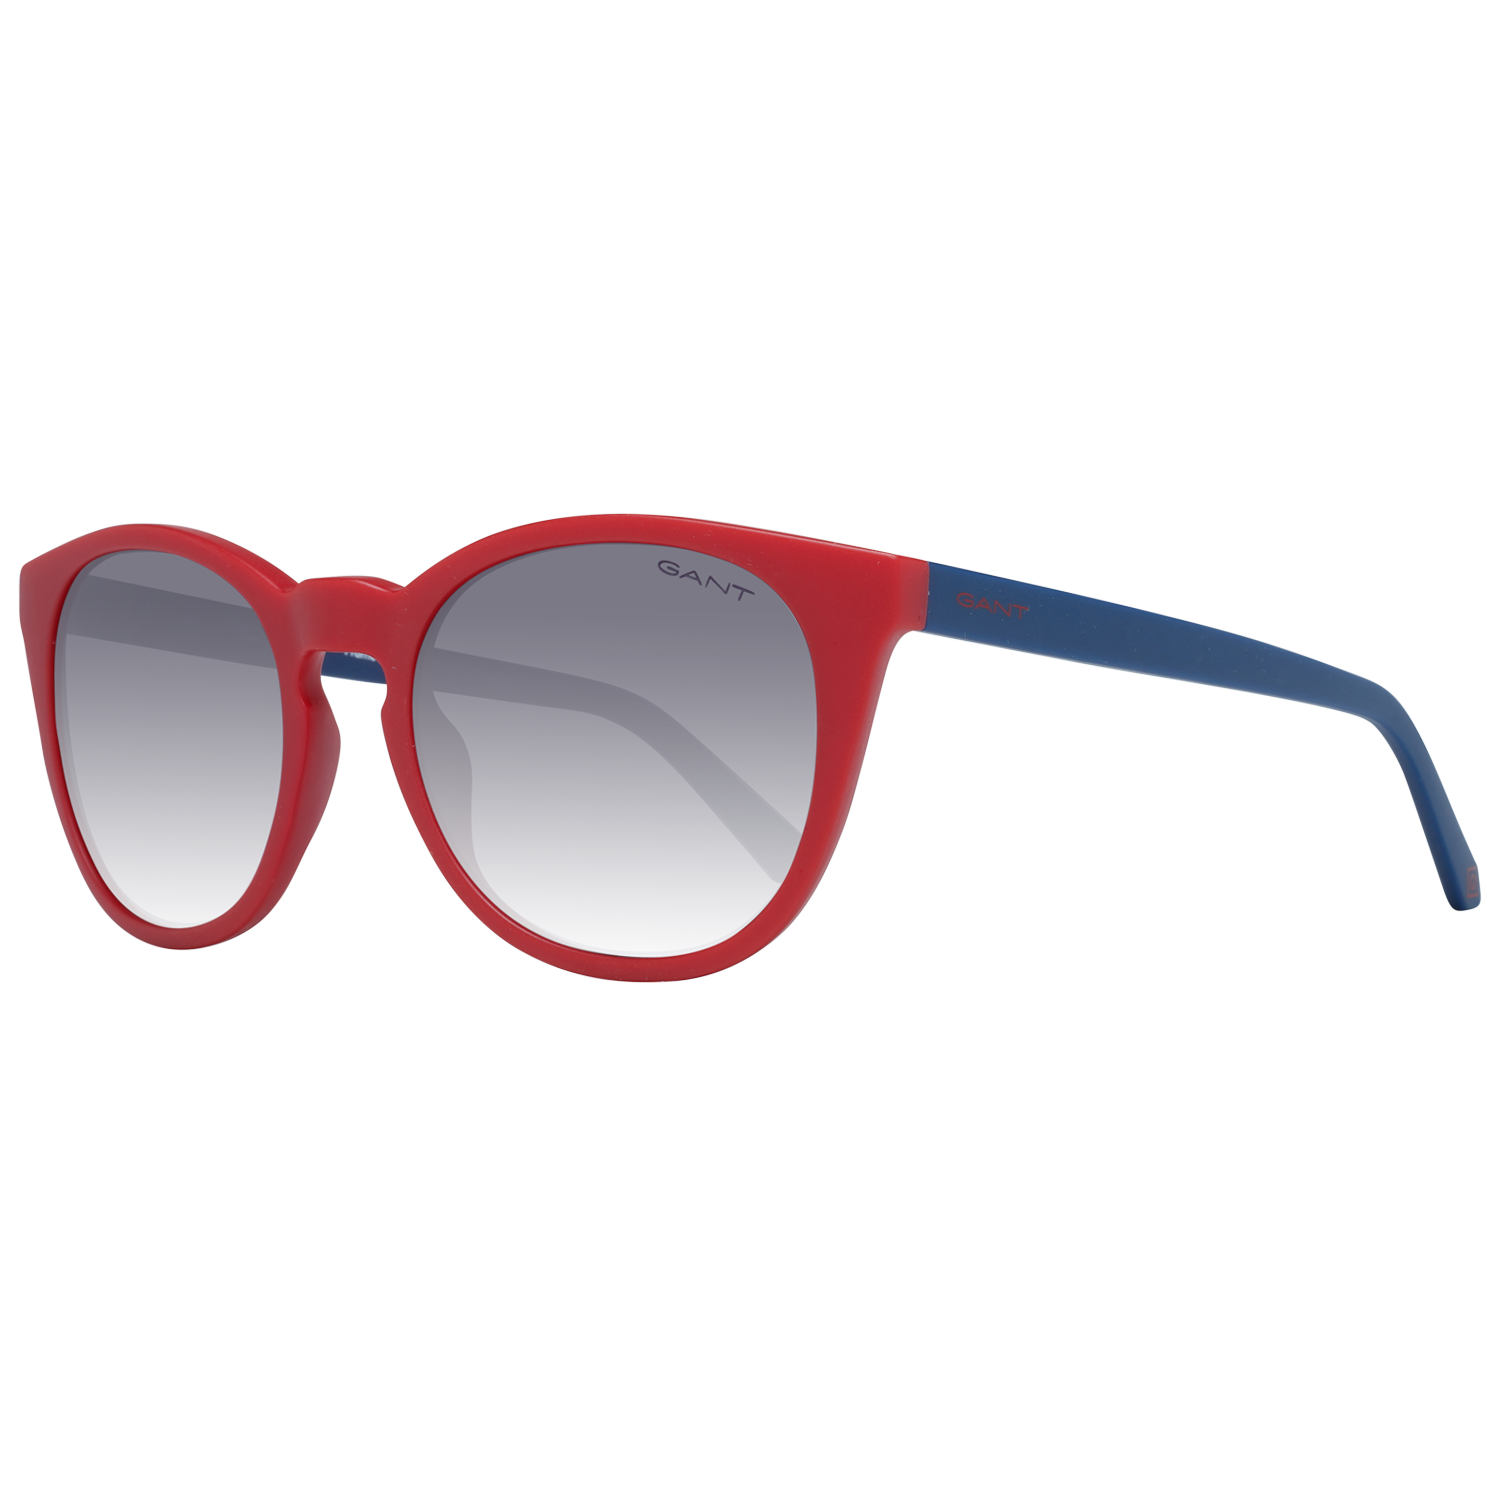 Gant Sunglasses Gant Sunglasses GA8080 67B 54 Eyeglasses Eyewear UK USA Australia 